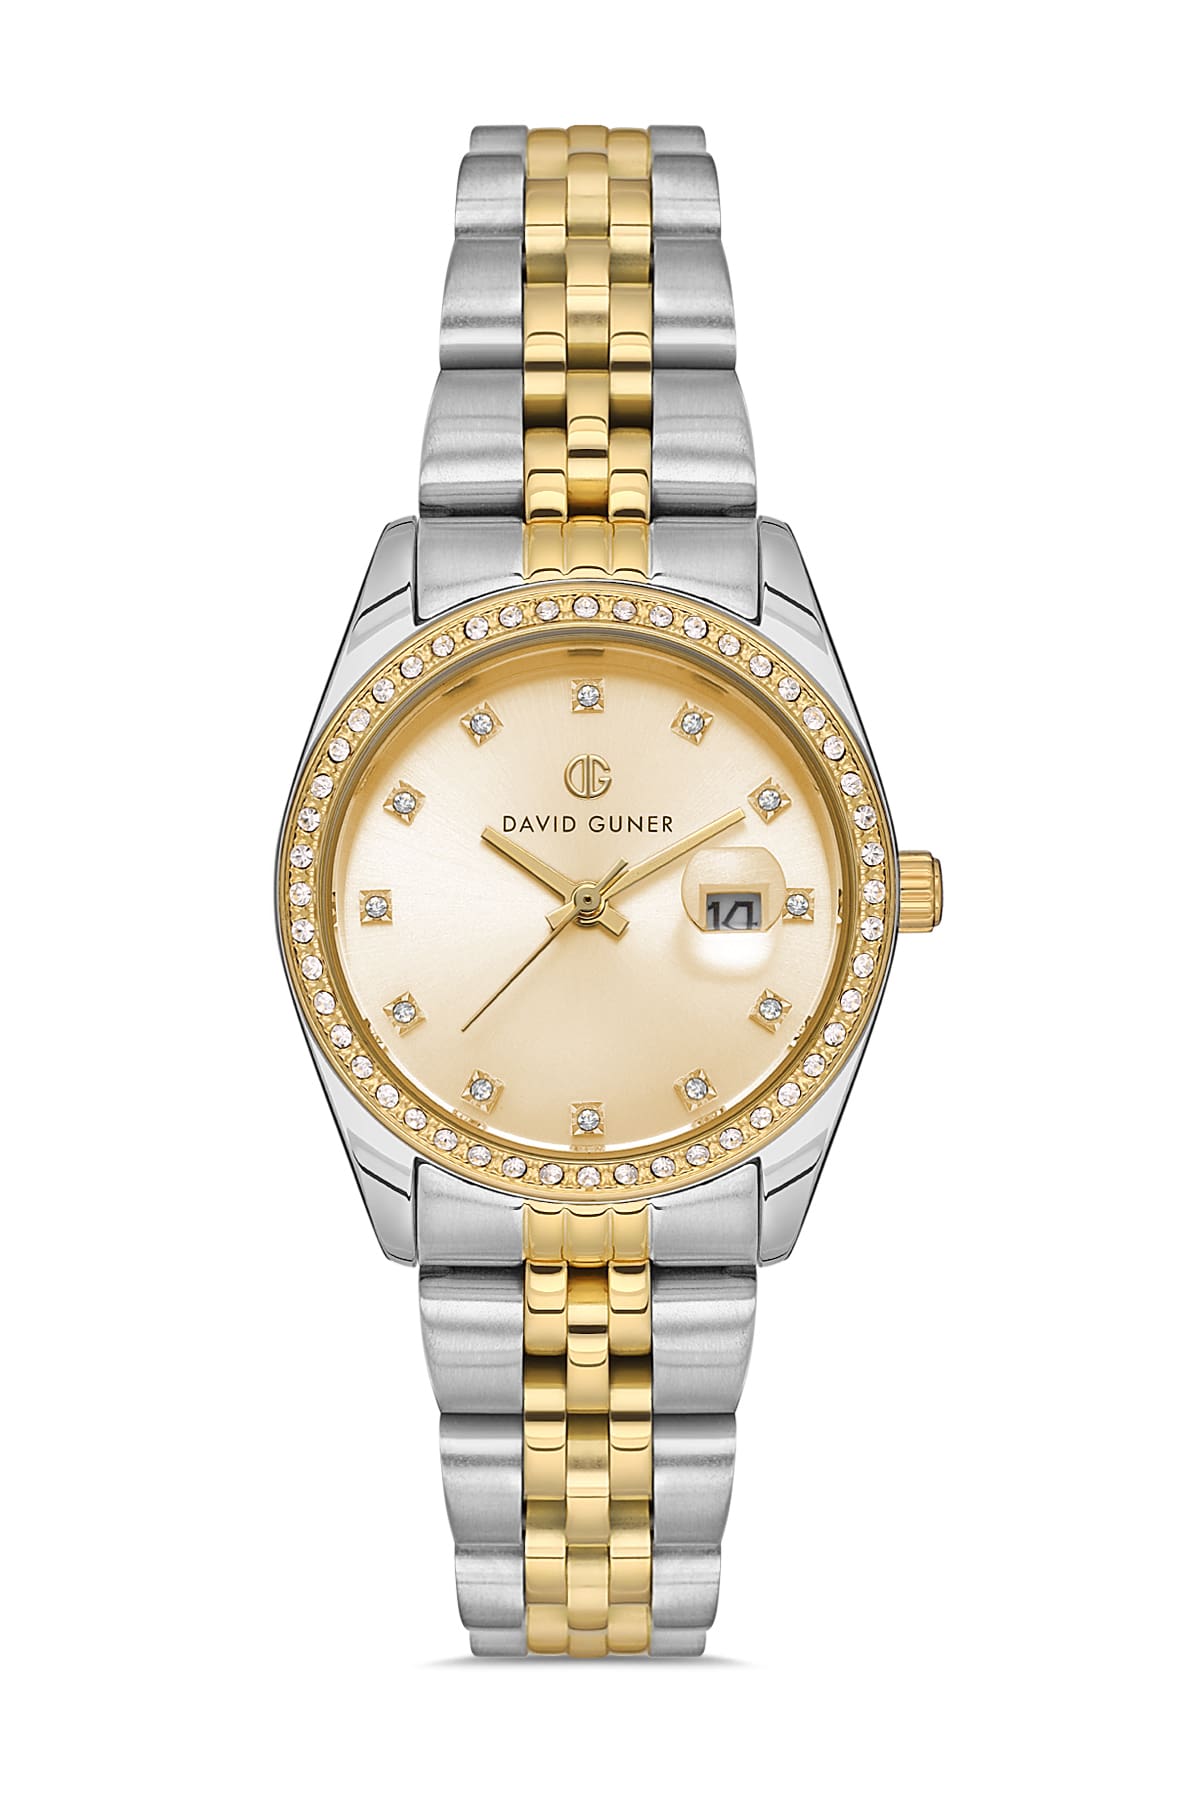 David Guner Yellow Dial Yellow White Coated Women's Wristwatch